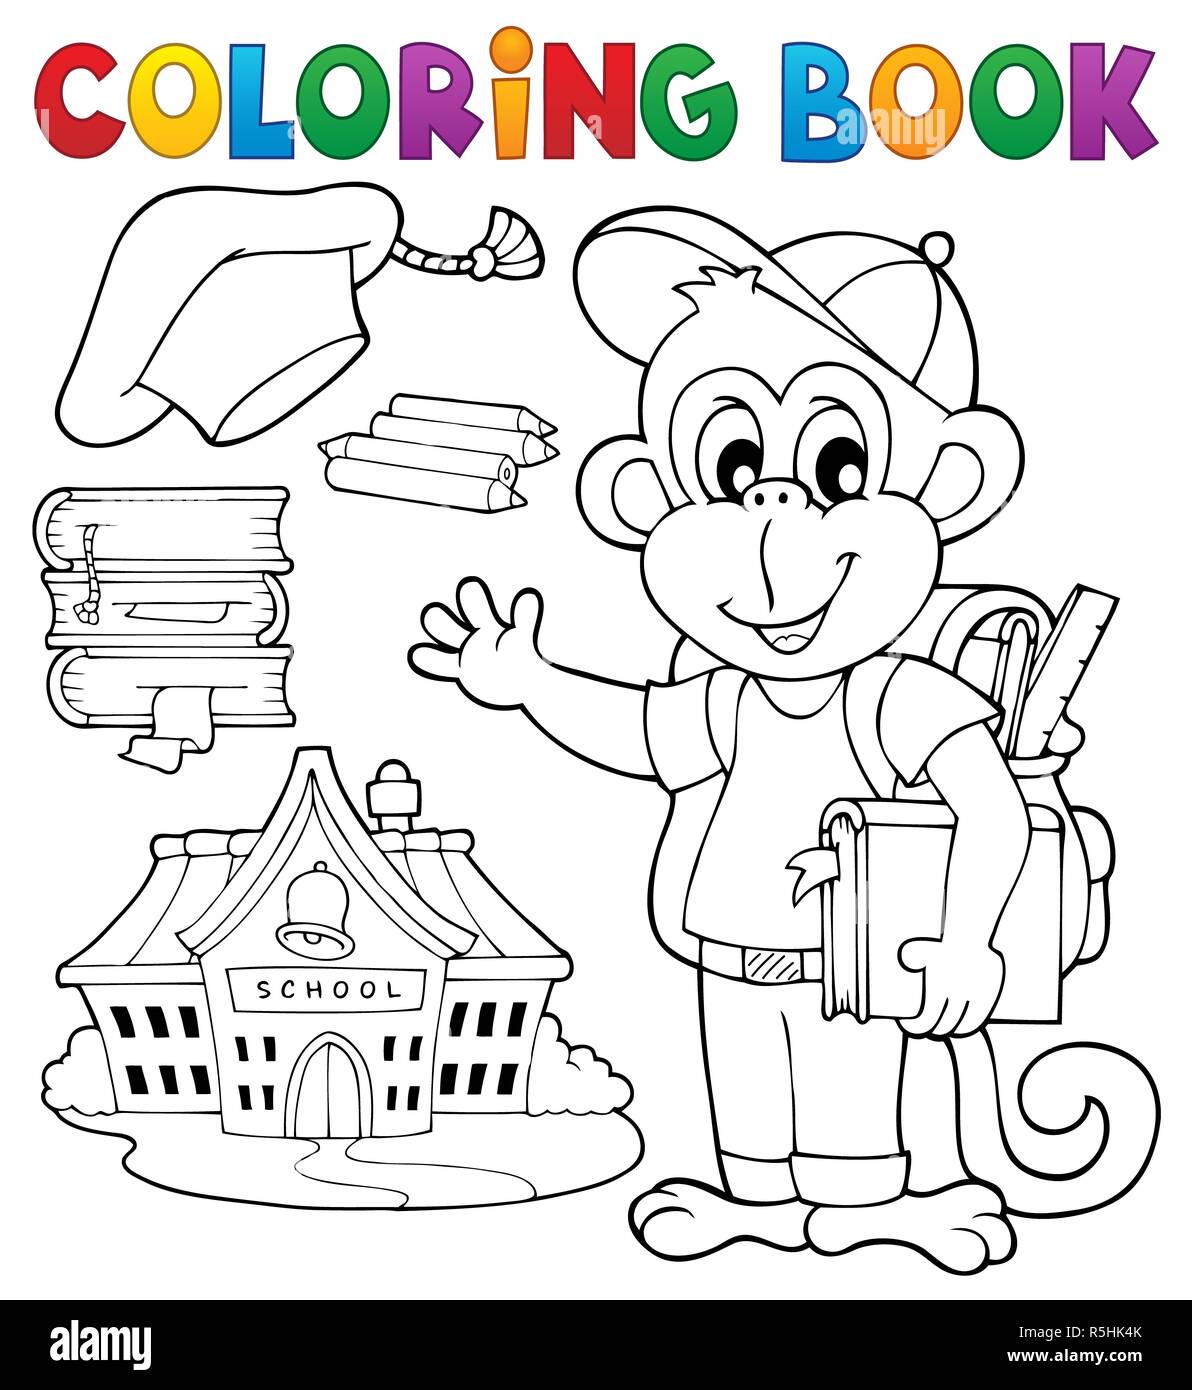 https://c8.alamy.com/comp/R5HK4K/coloring-book-school-monkey-theme-1-R5HK4K.jpg